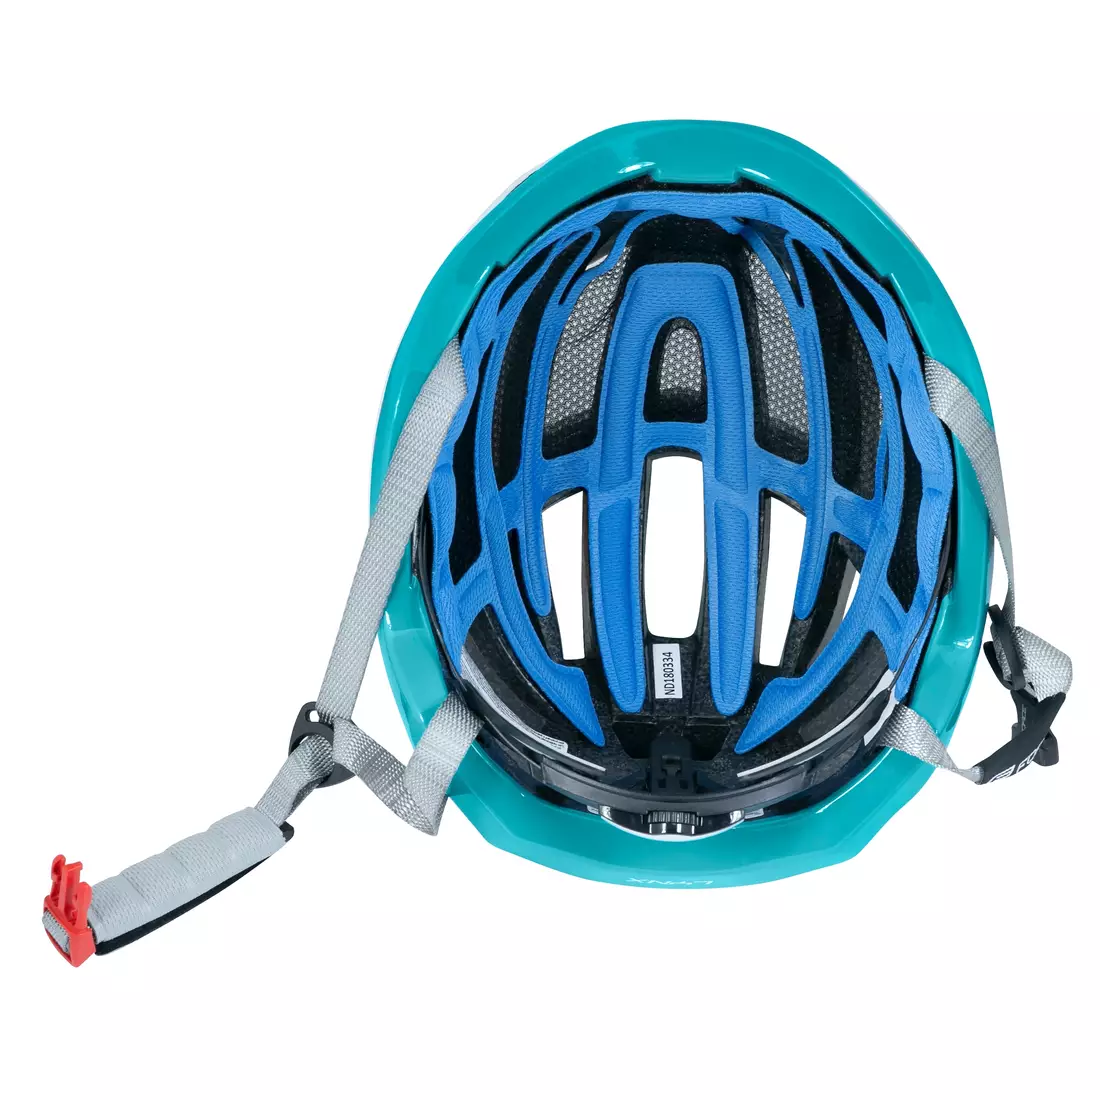 FORCE LYNX Bicycle helmet turquoise